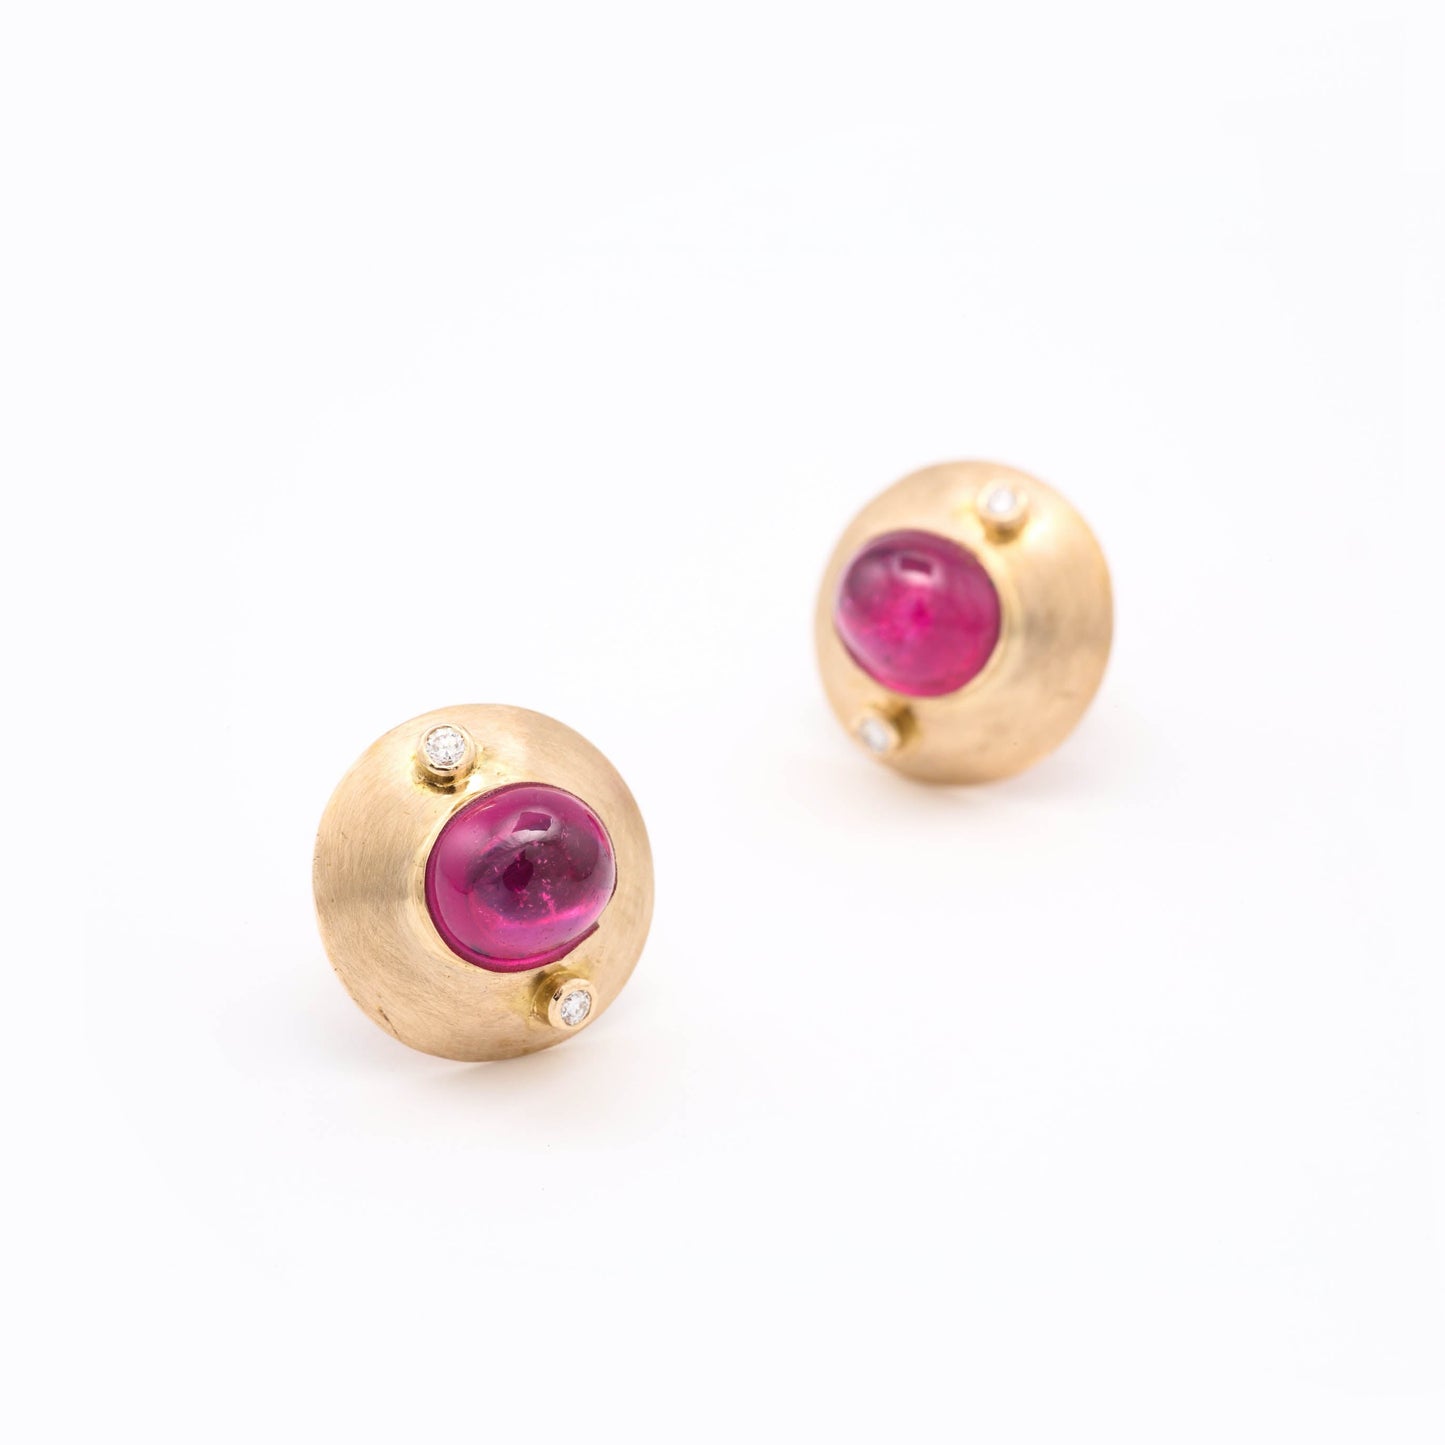 The Taru Gold, Ruby and Diamond Ear Studs by Rasvihar